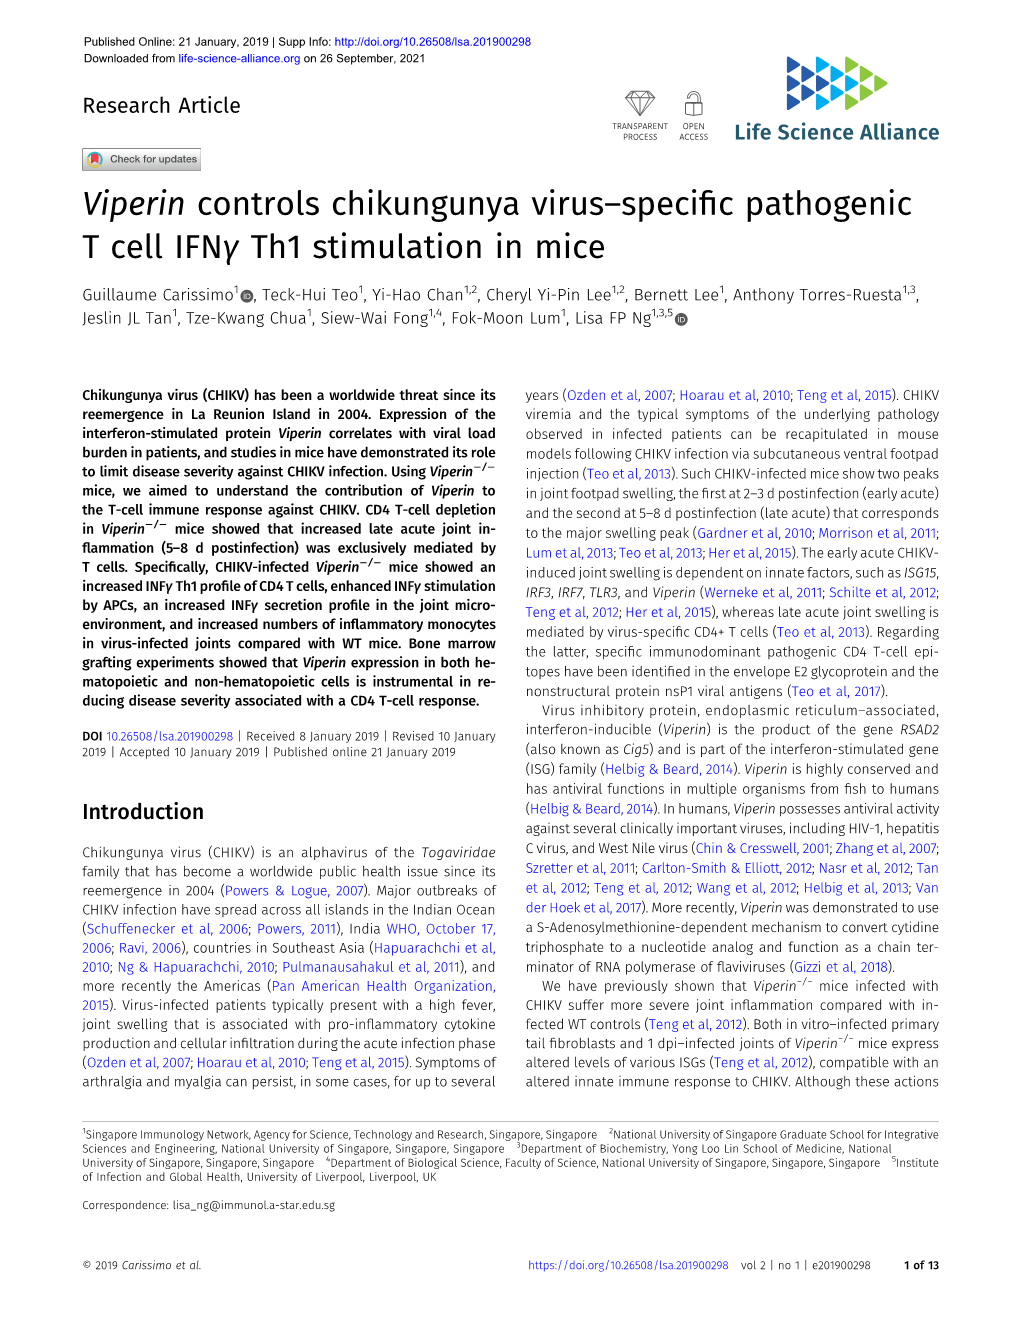 Viperin Controls Chikungunya Virus–Specific Pathogenic T Cell Ifnγ